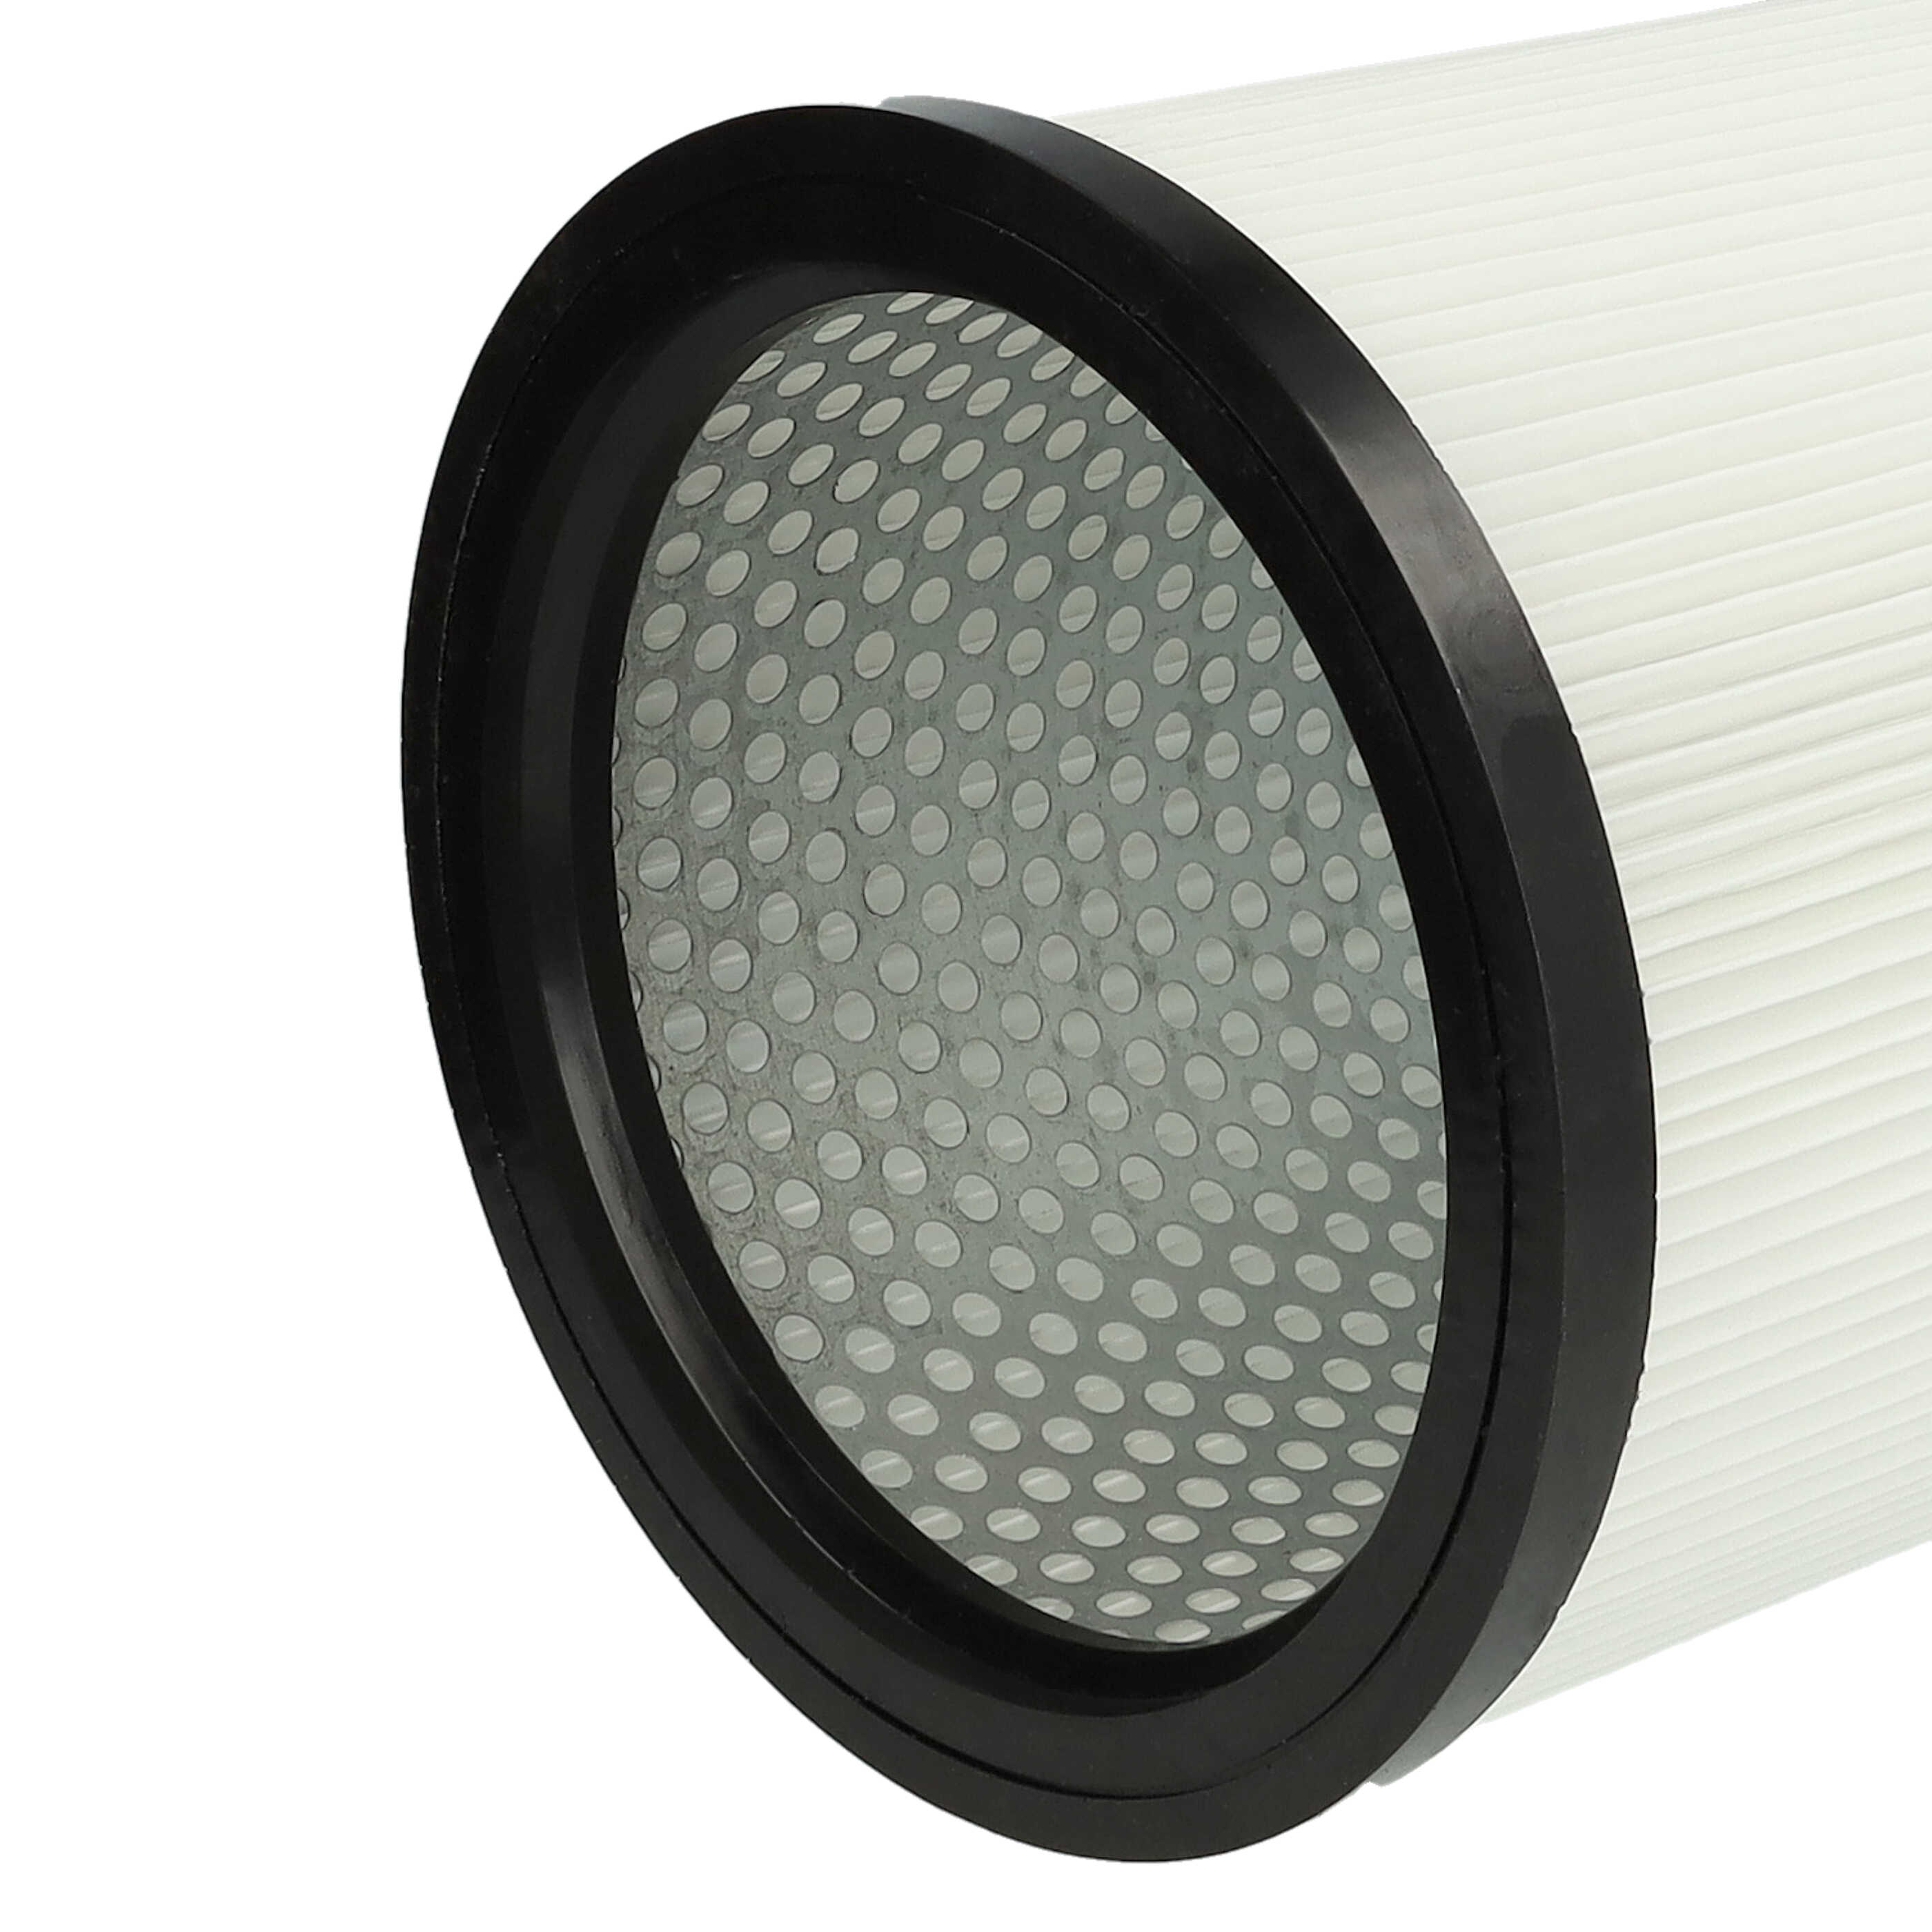 1x cartridge filter replaces Kärcher 9.770-988.0, 6.907-038.0 for Kärcher Vacuum Cleaner, white